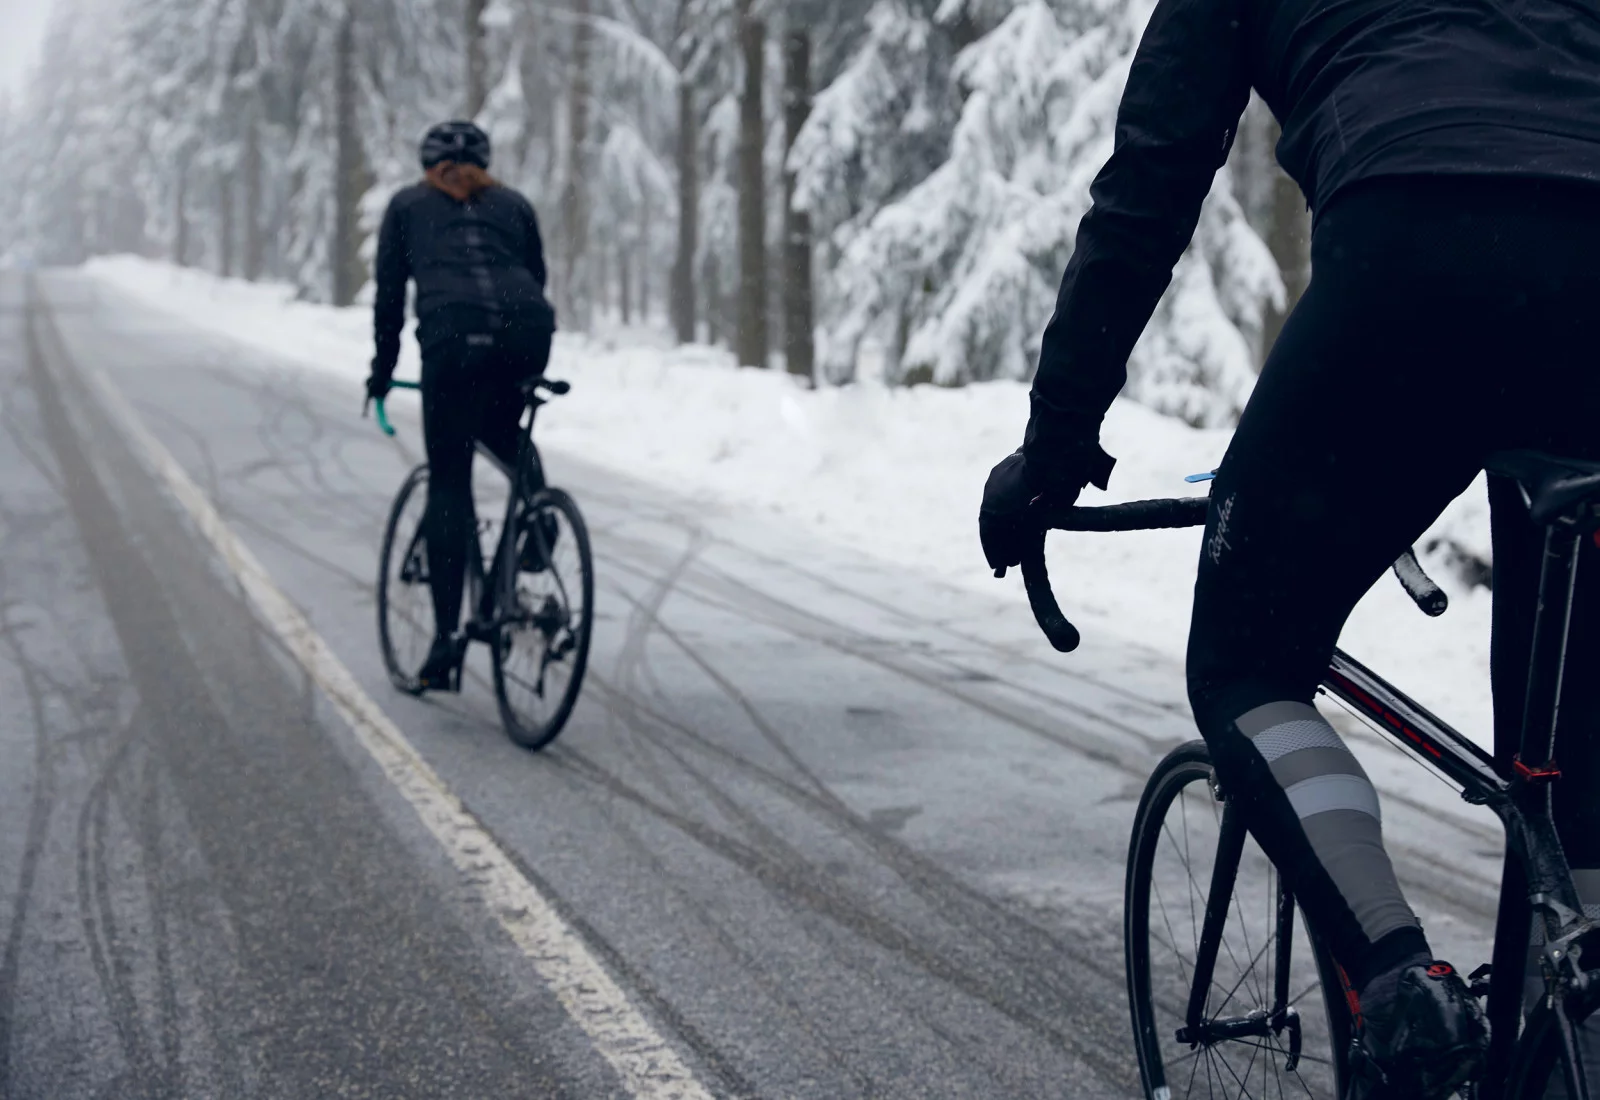 Winter Cycling 3 by Marc TRAUTMANN